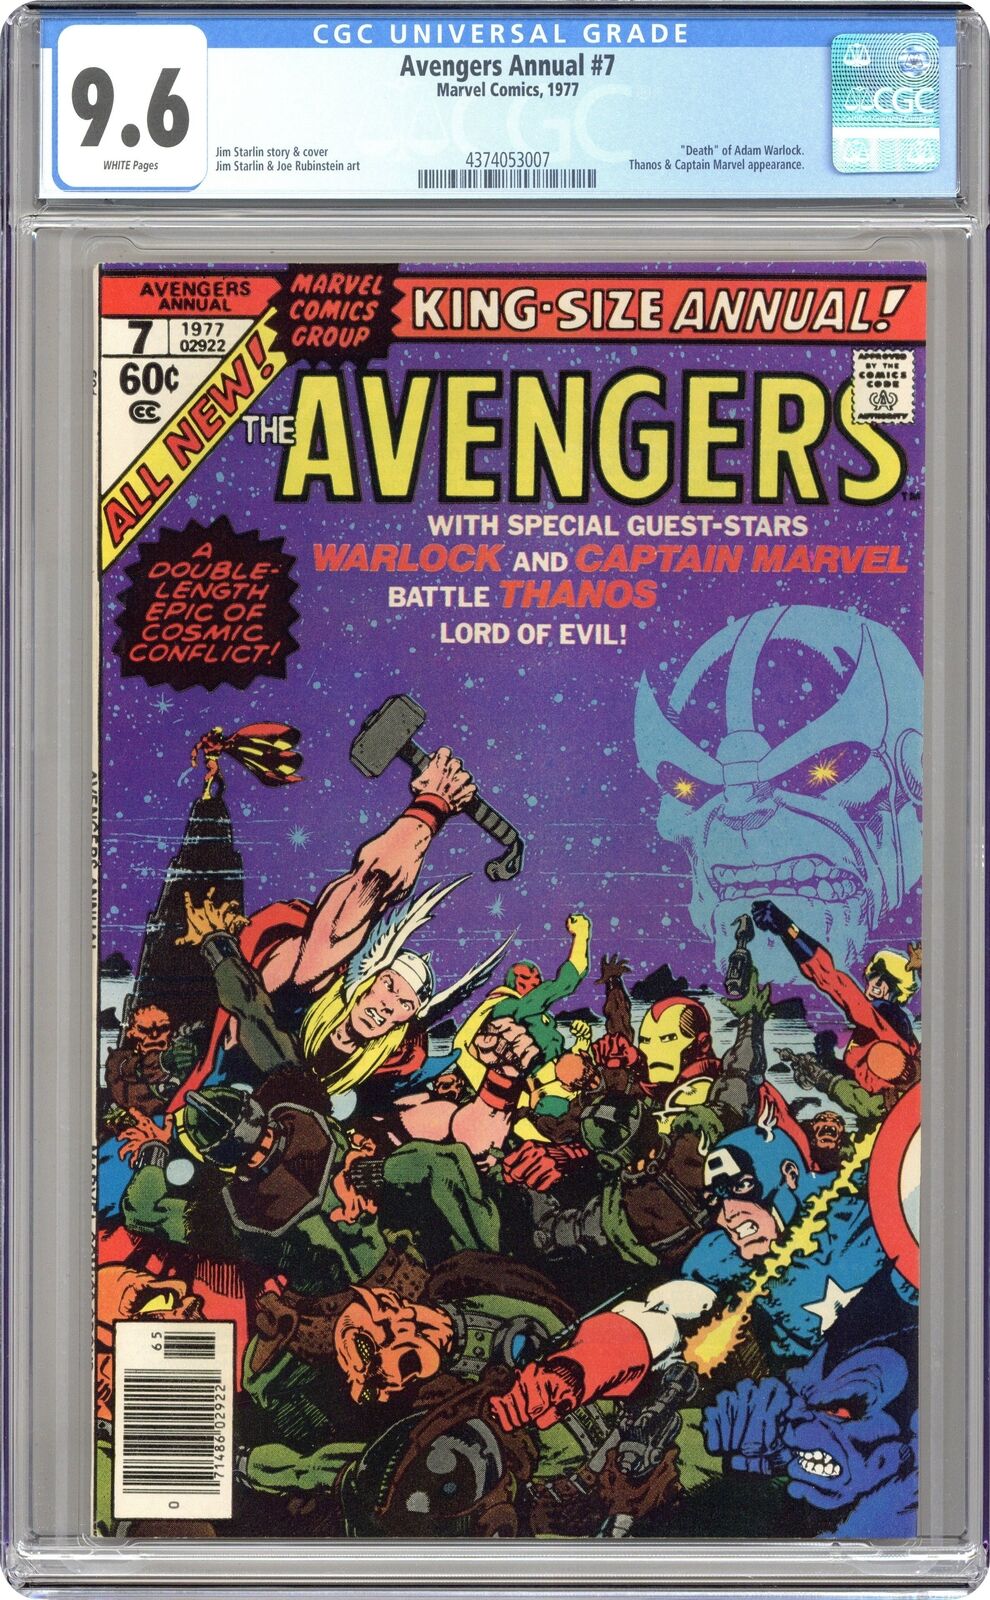 Avengers Annual #7 CGC 9.6 1977 4374053007 1st app. Space Gem